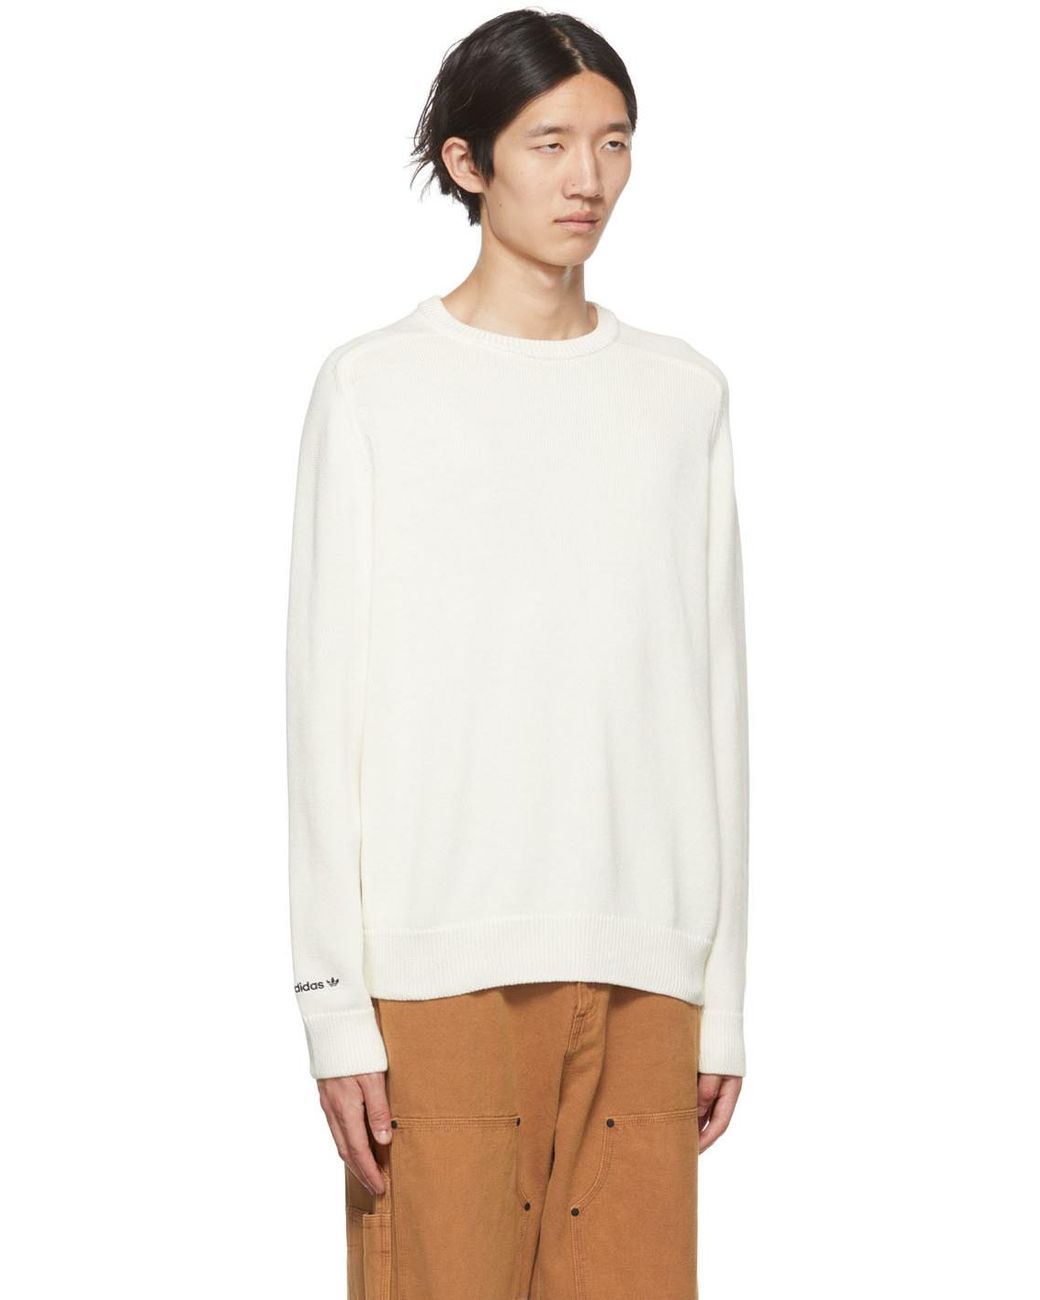 Noah Cotton Off-white Adidas Originals Edition Knit Sweater for Men | Lyst